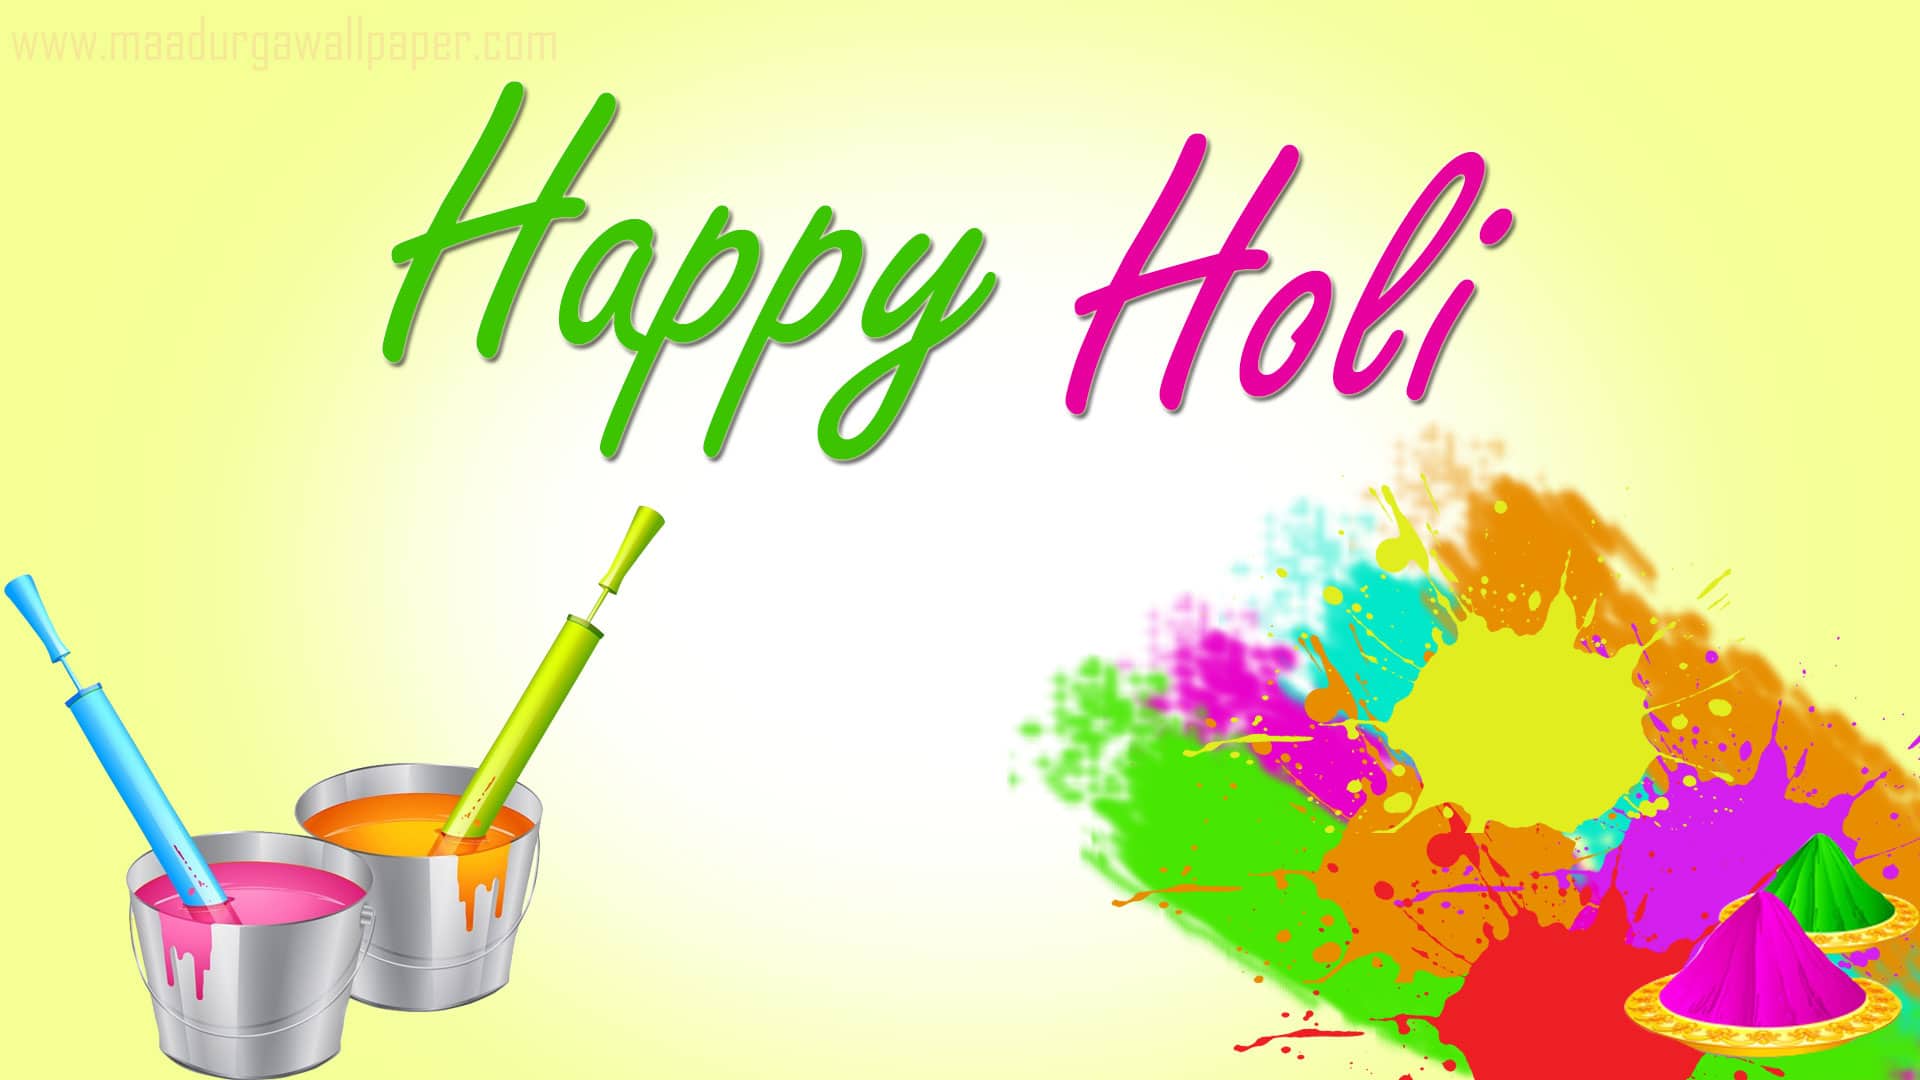 1920x1080 Happy Holi Wallpaper - Happy Holi Image 2019 HD - HD